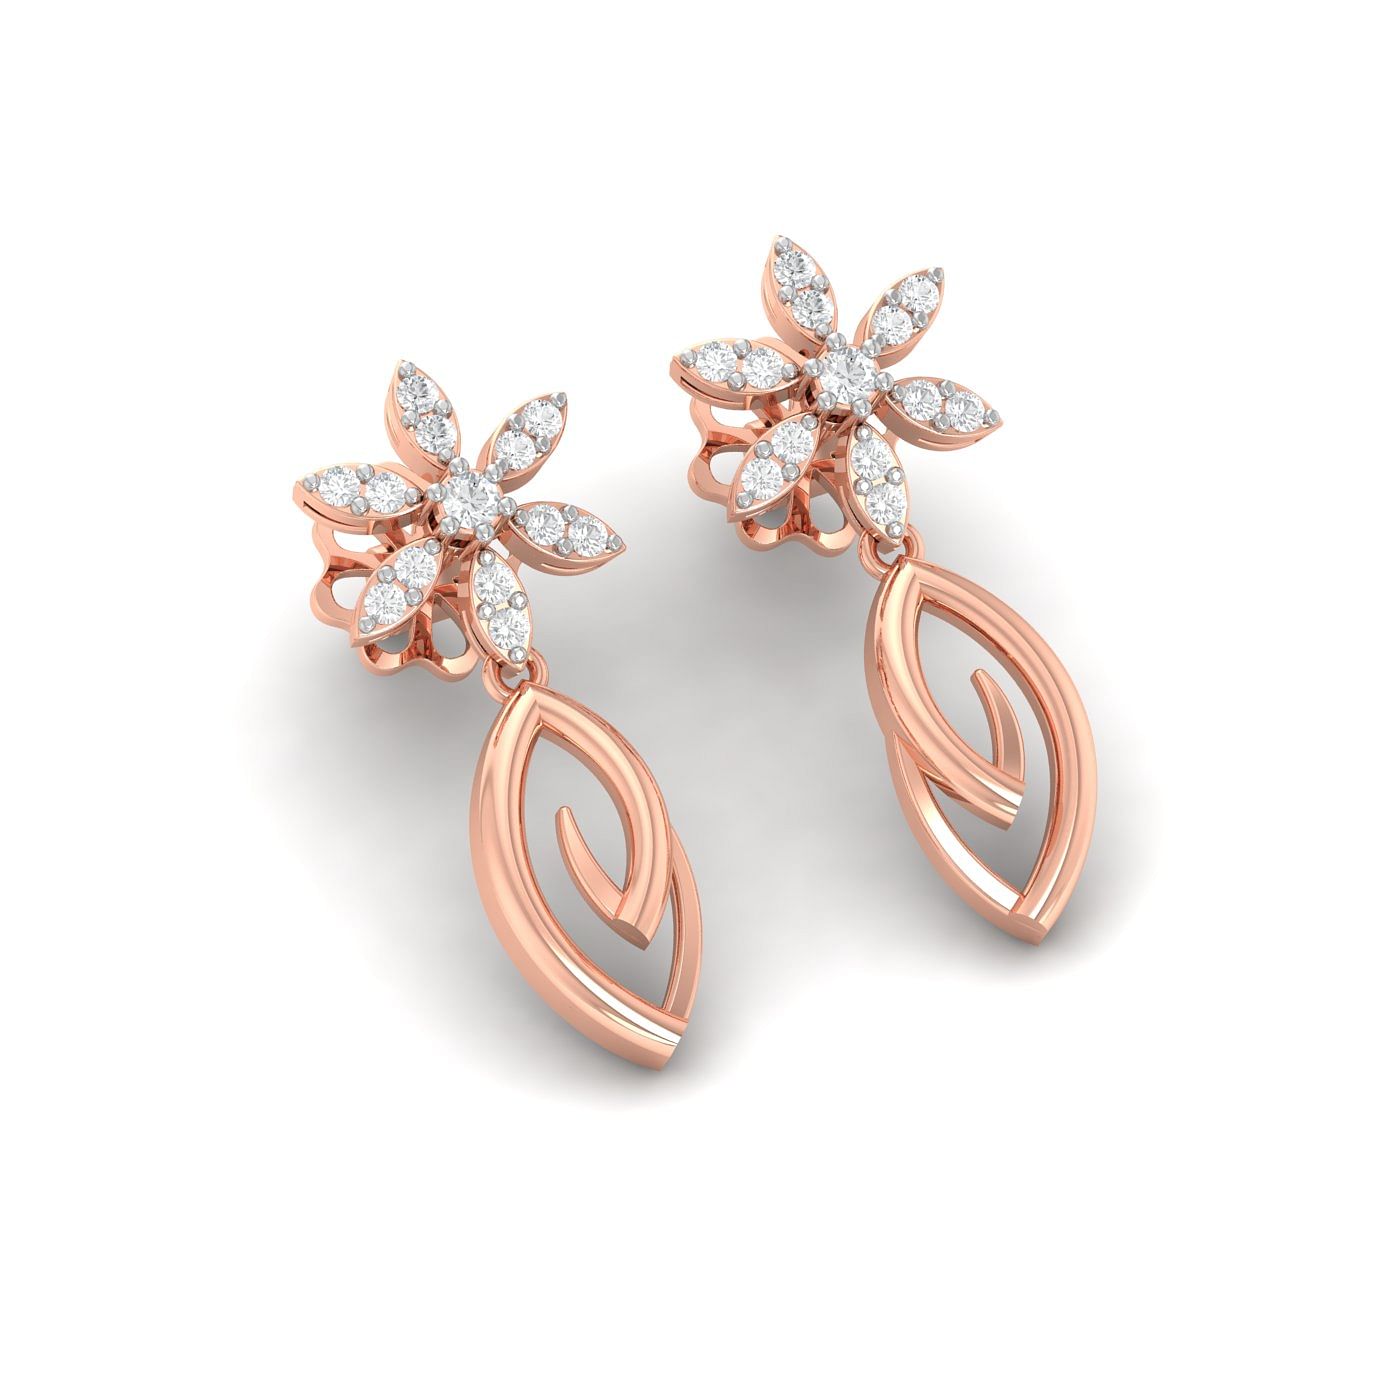 Earrings - Etika Jewels | Diamond and Gold Earrings in the UAE